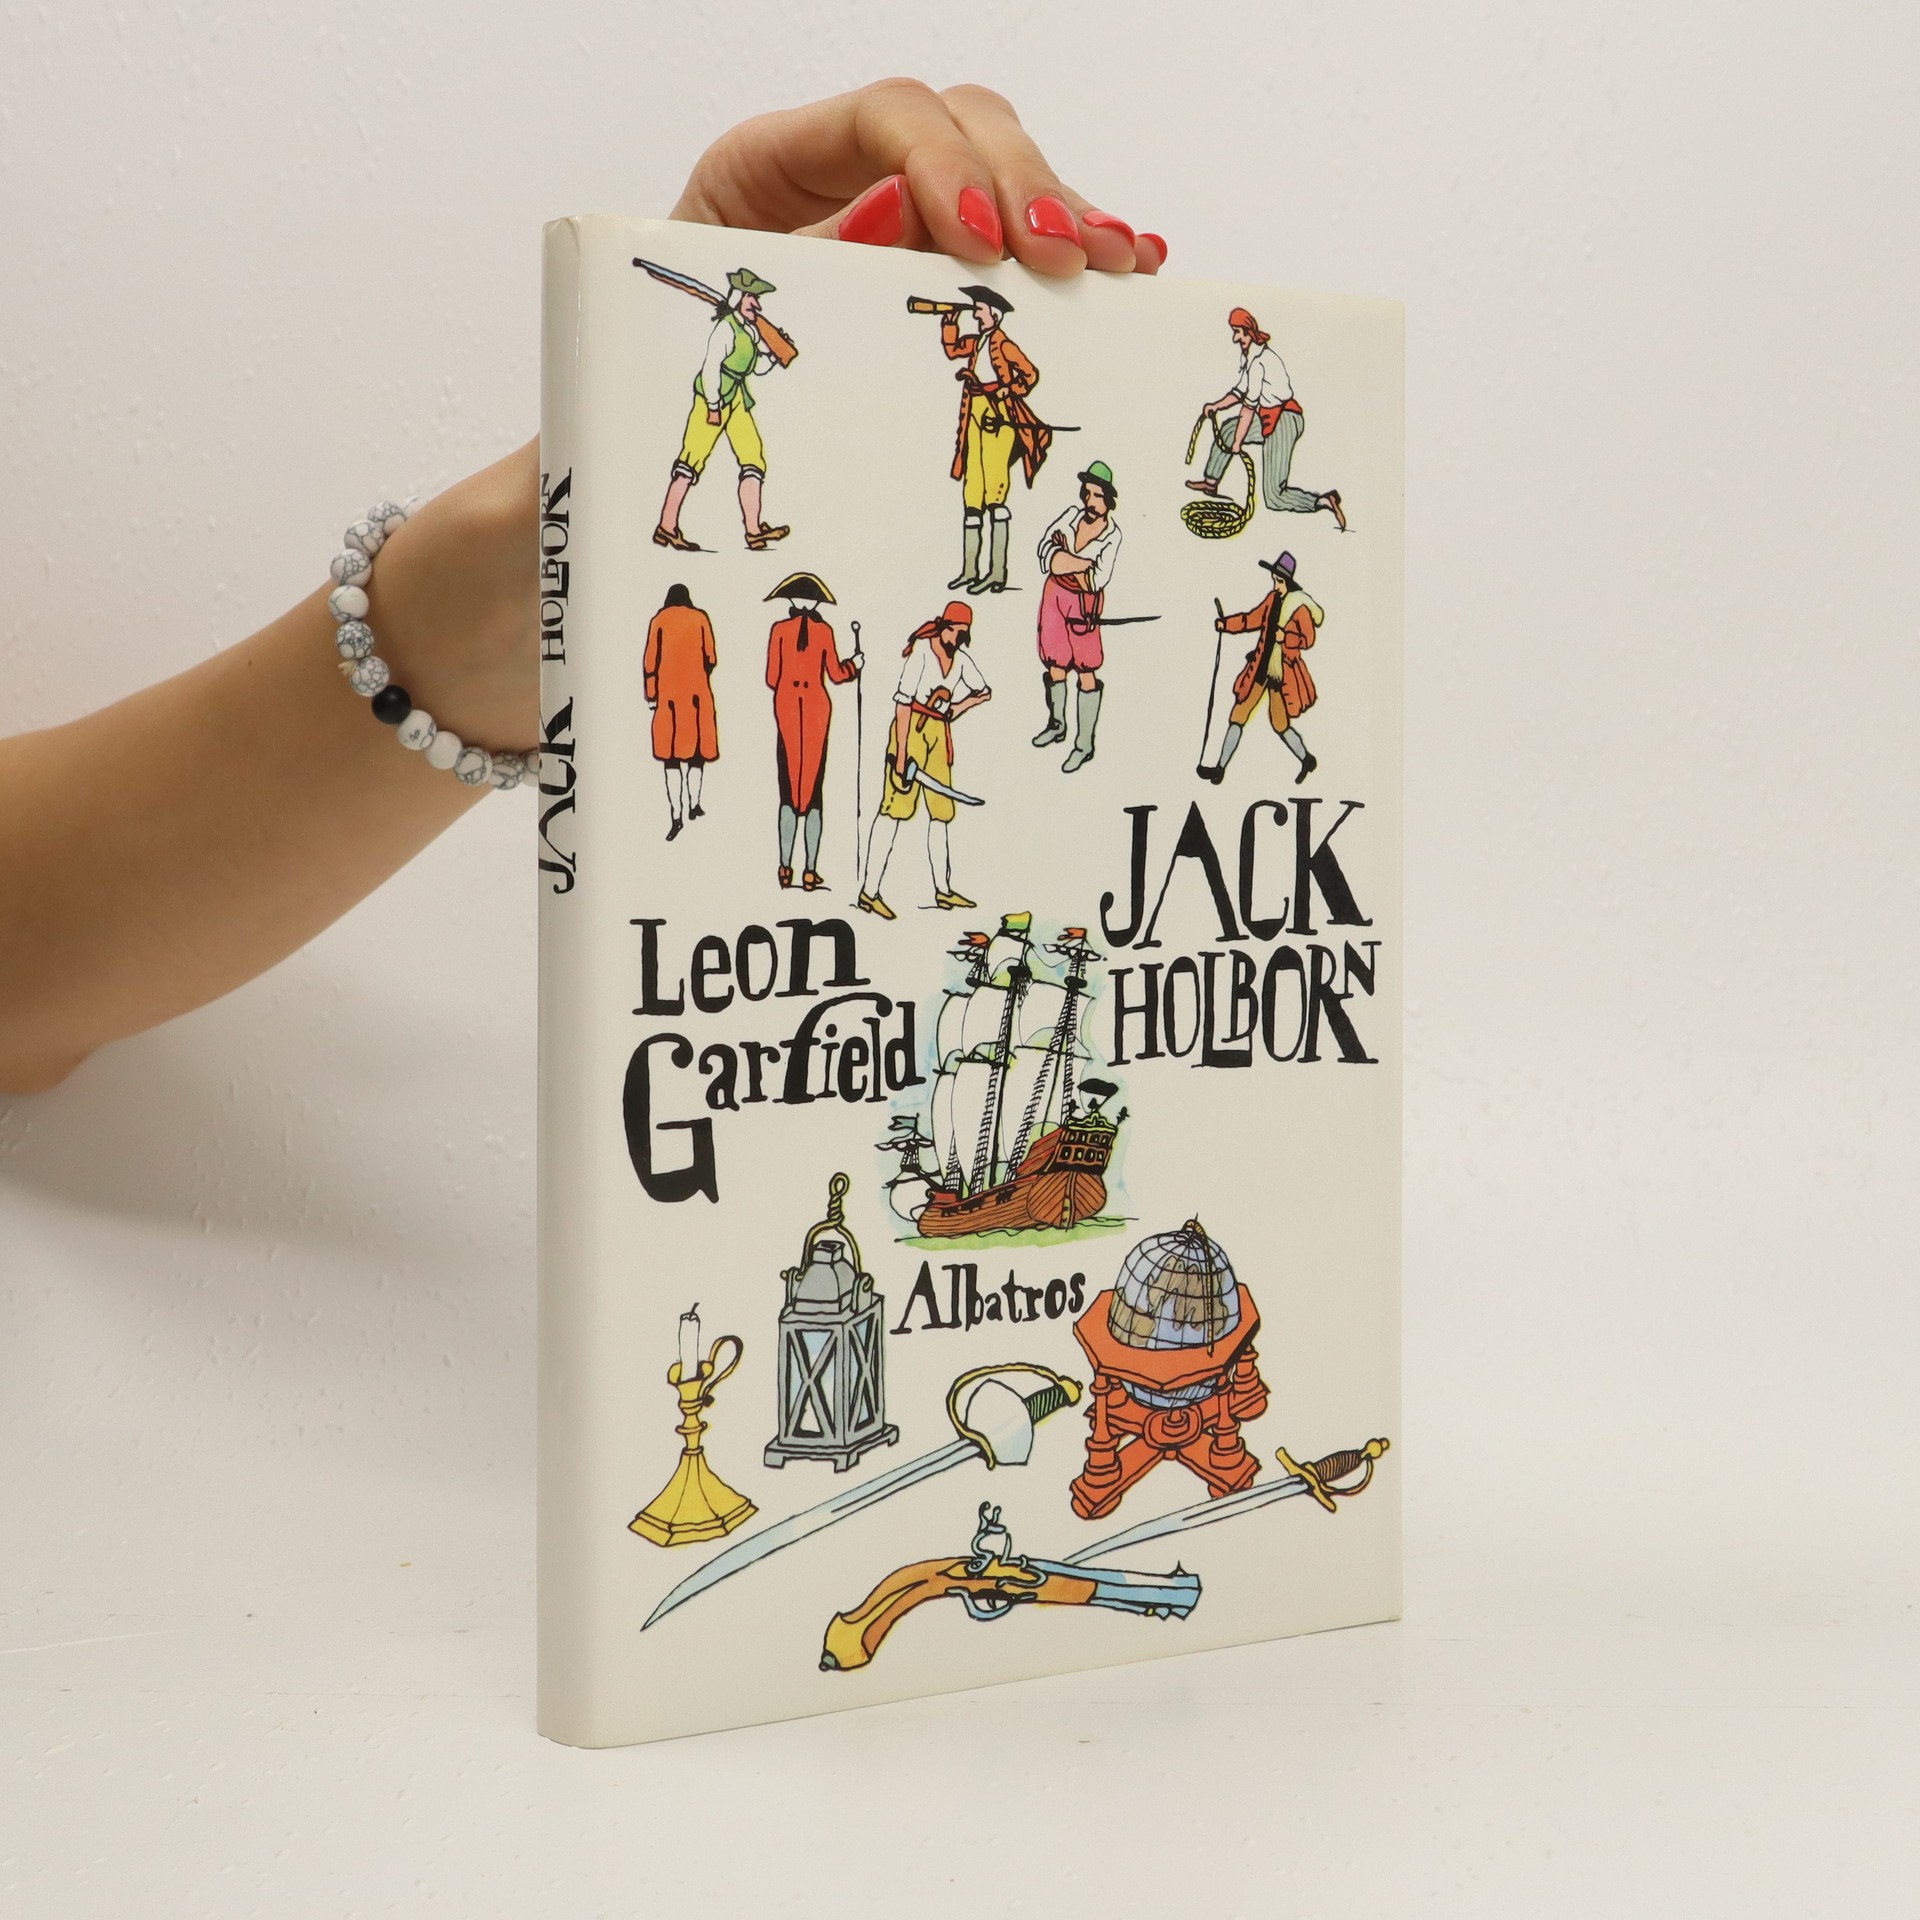 Jack Holborn by Leon Garfield